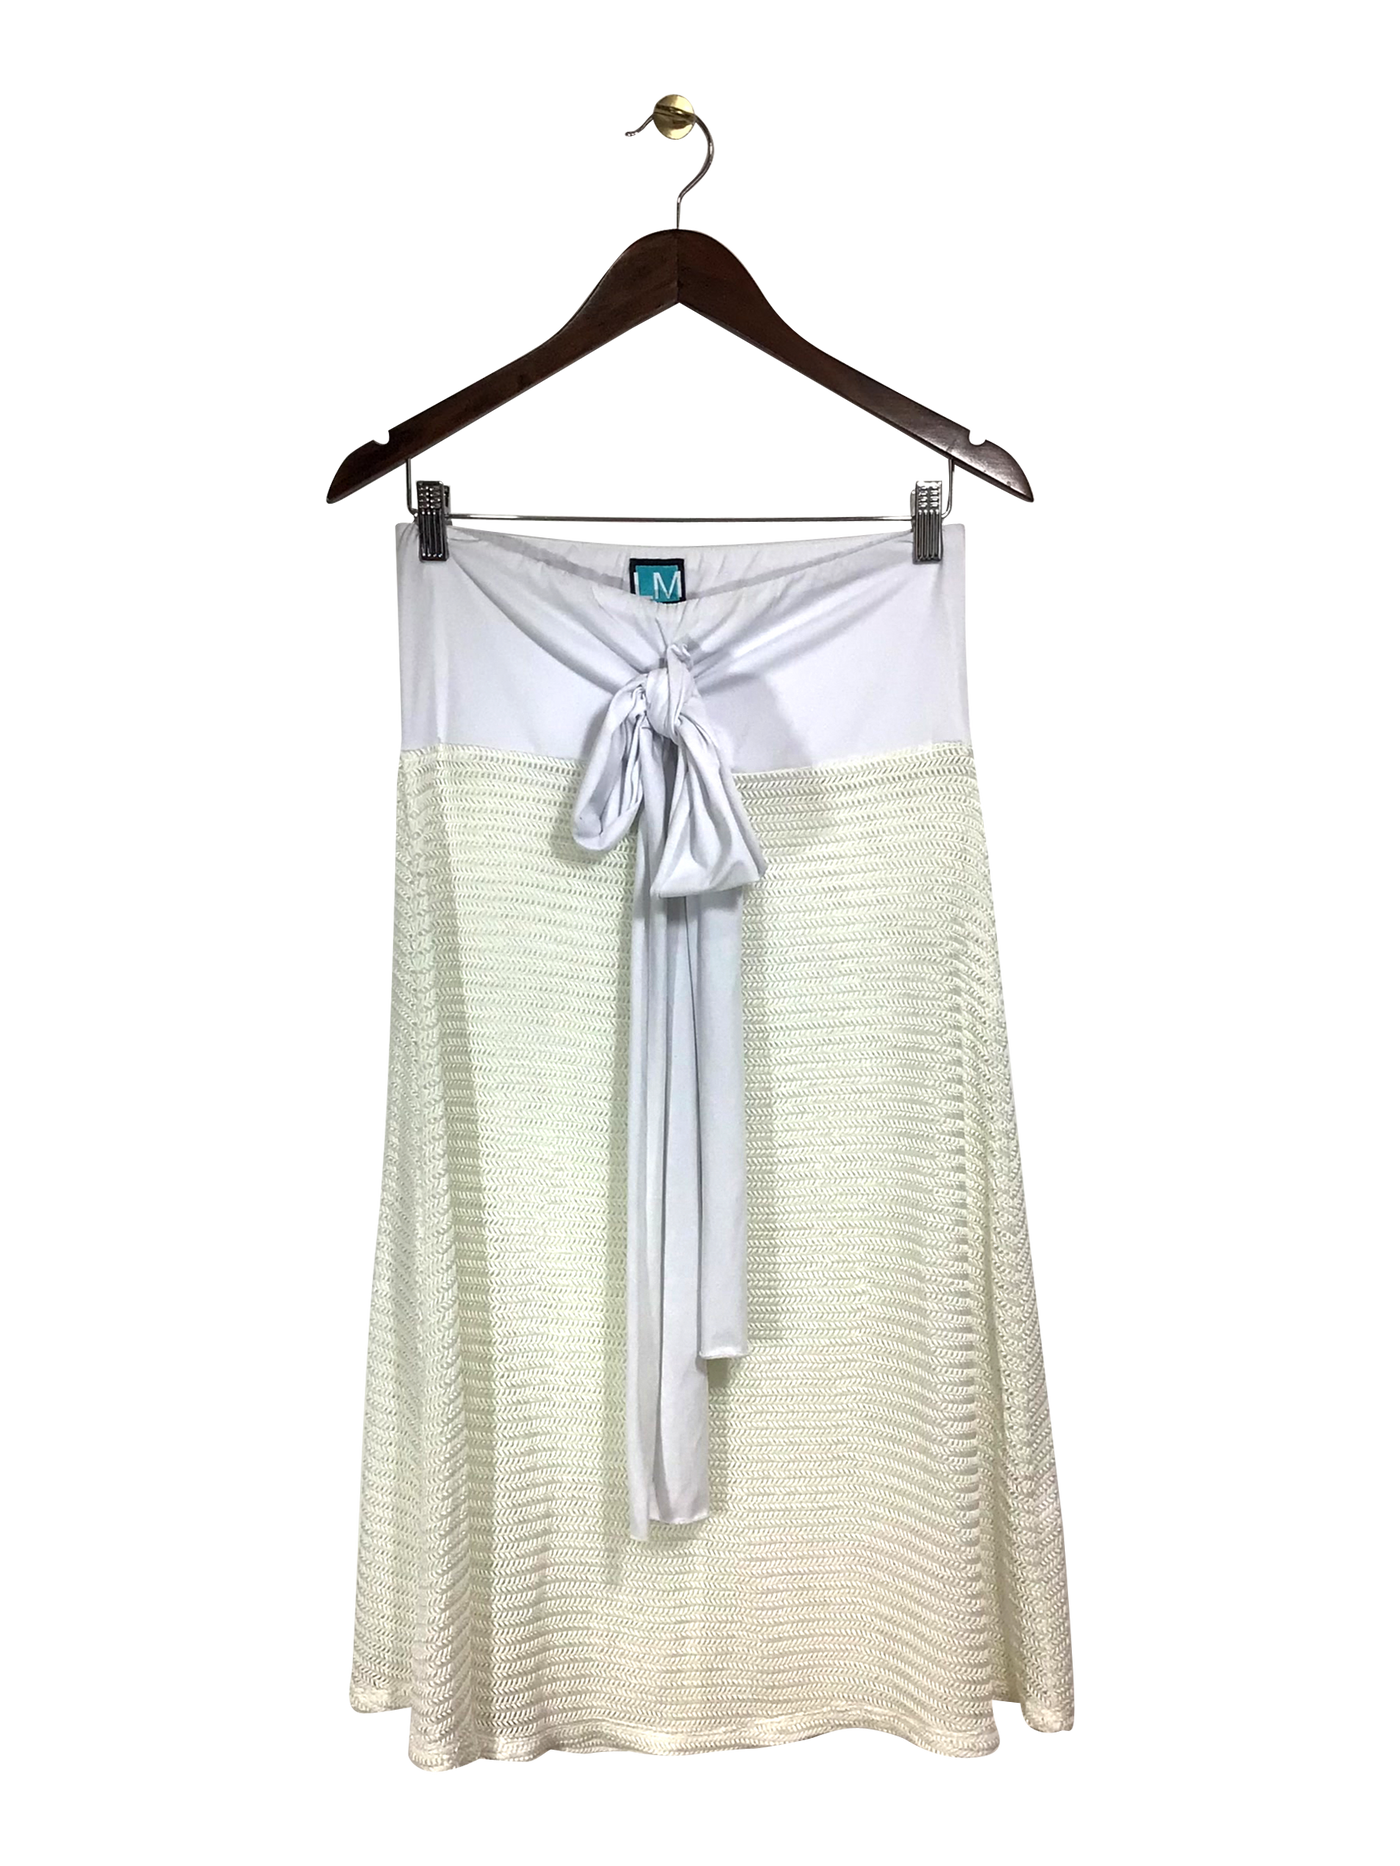 LM BEACH Regular fit Skirt in White - Size S | 15 $ KOOP